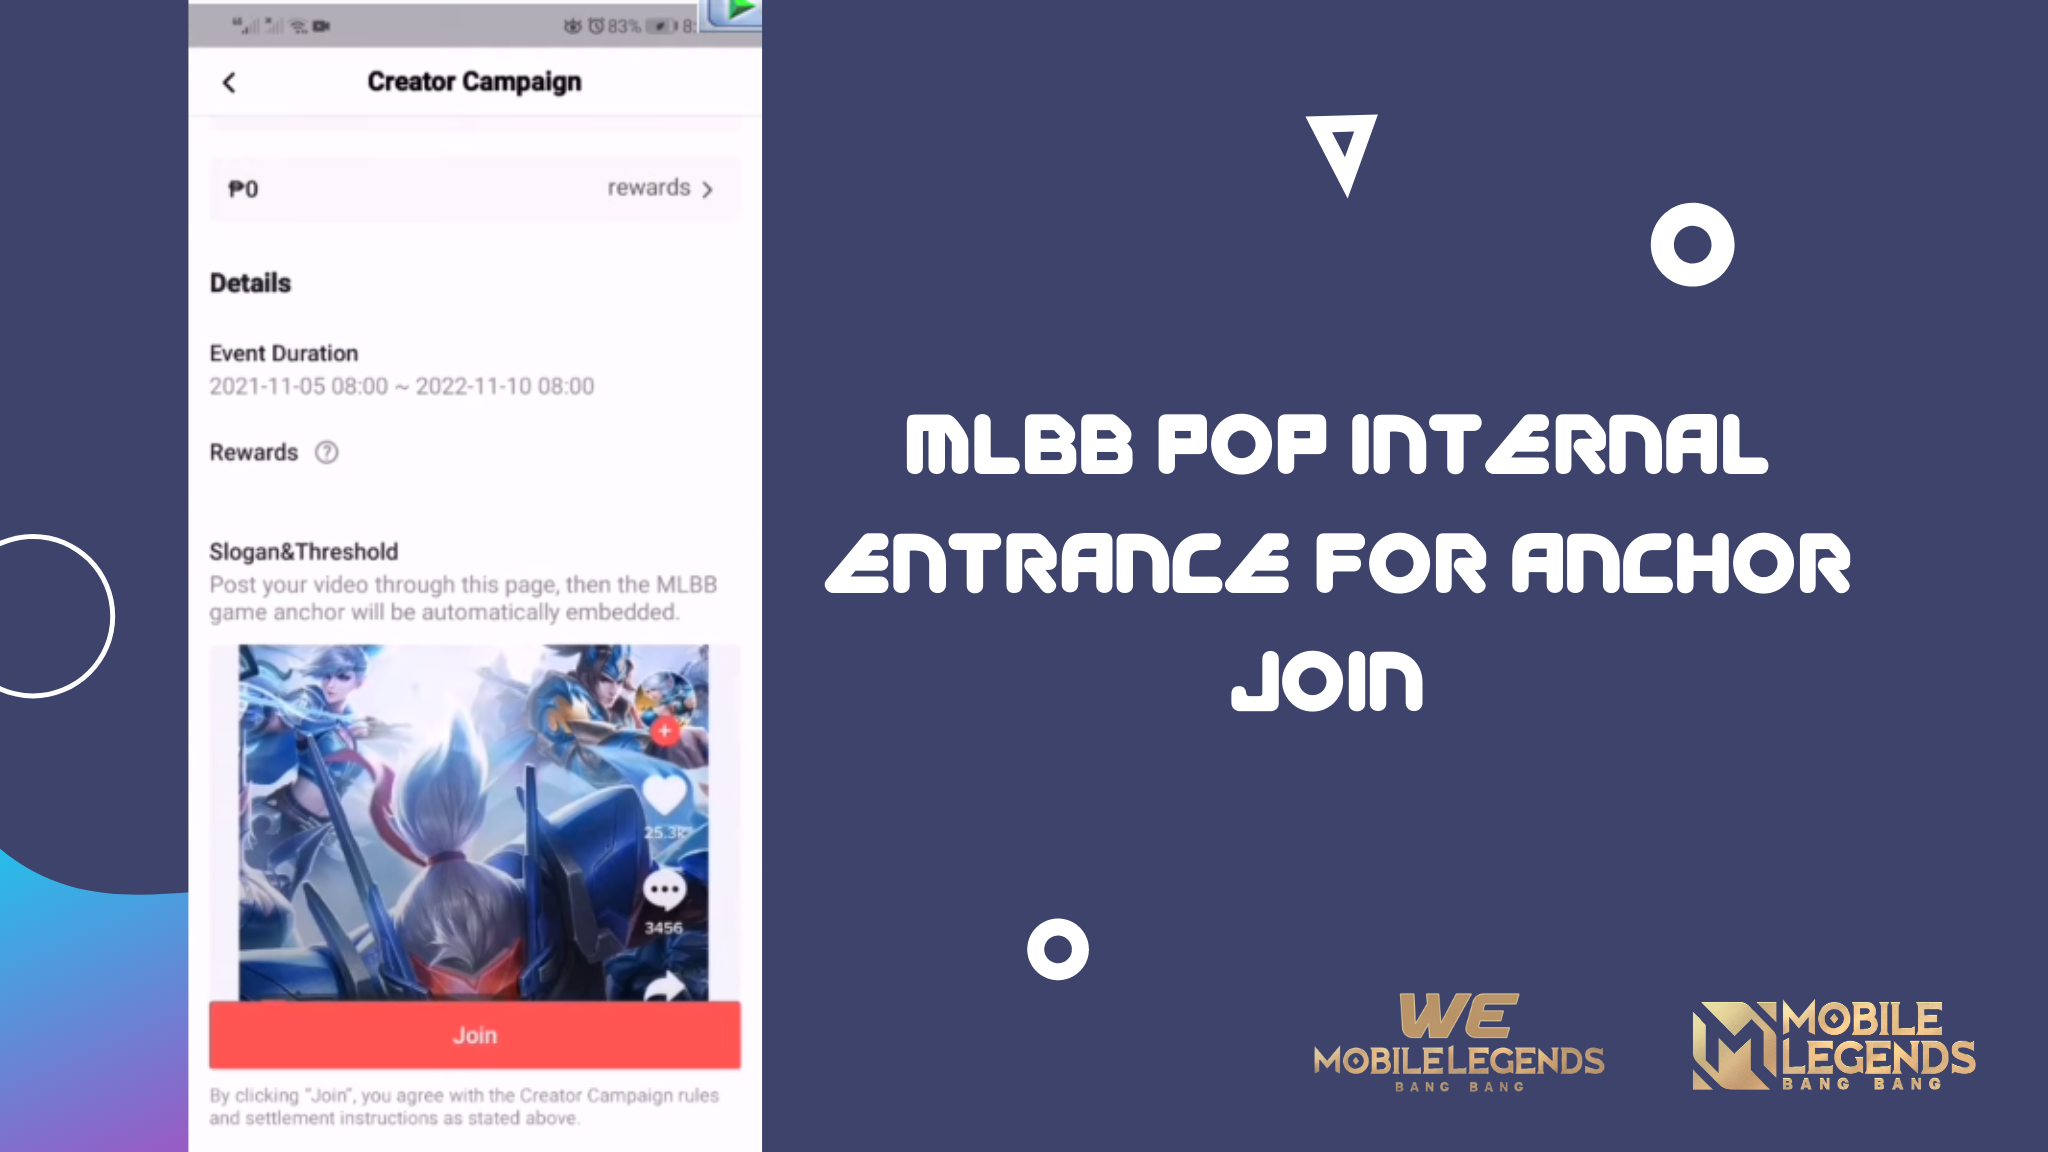 MLBB Pop Internal Entrance For Anchor Join 